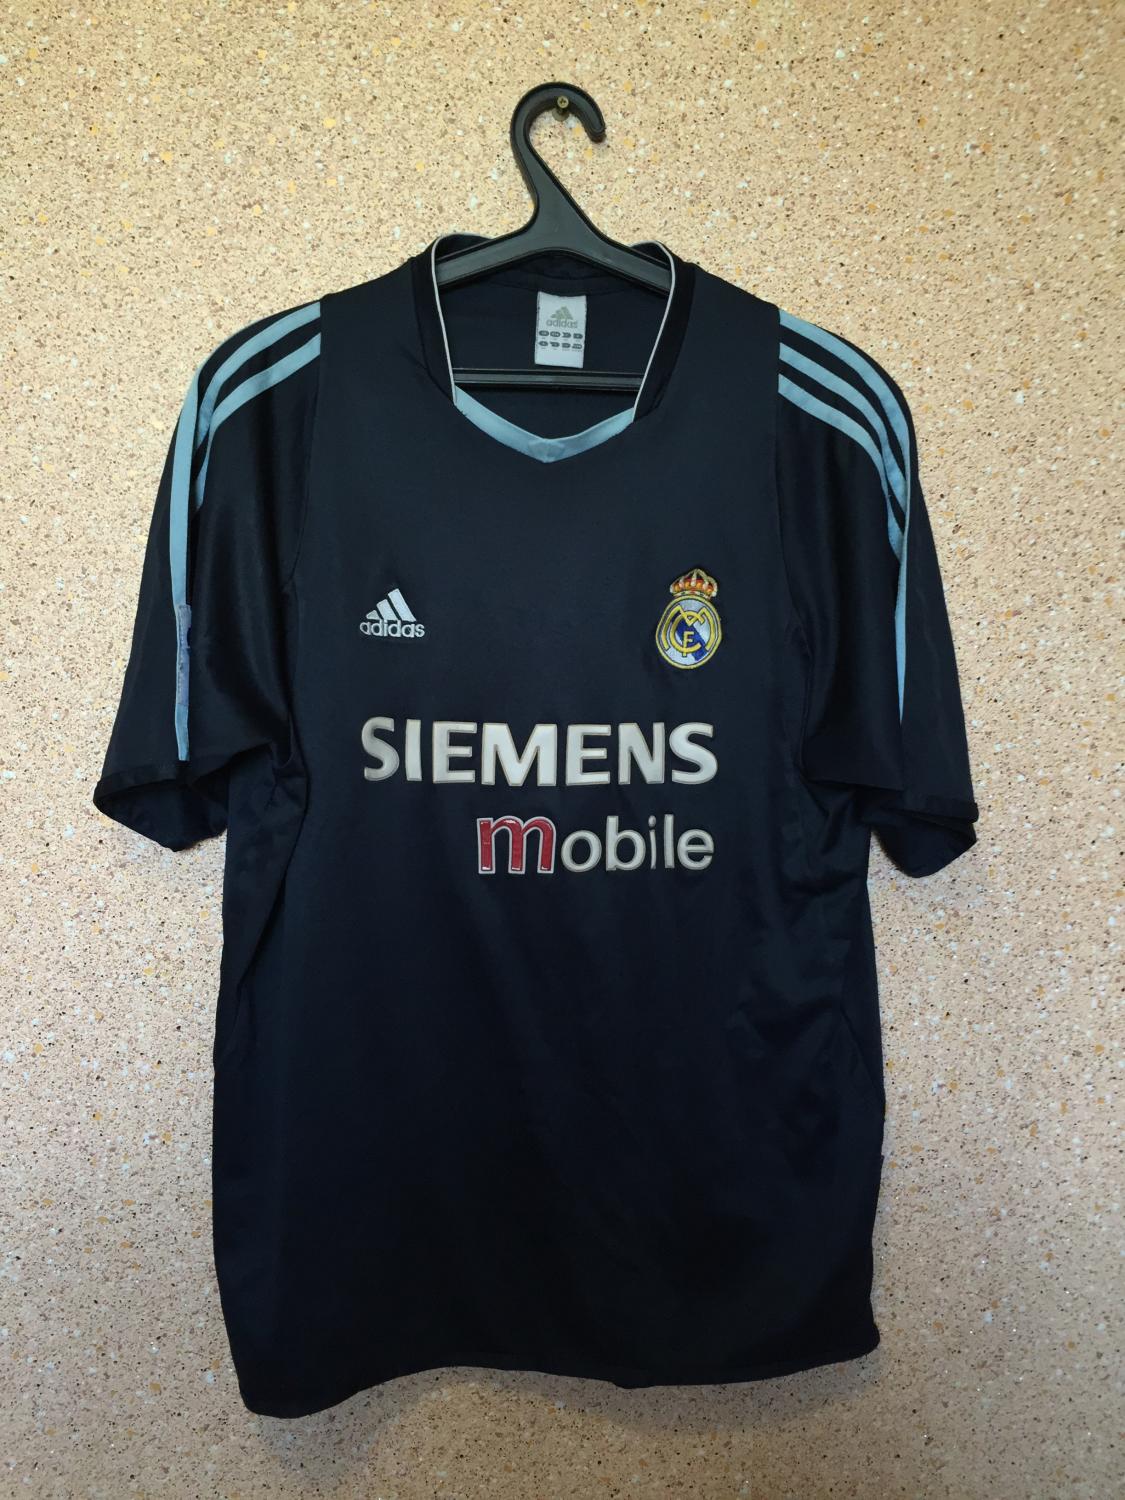 Real Madrid Away football shirt 2003 - 2004. Added on 2014-12-19, 16:14